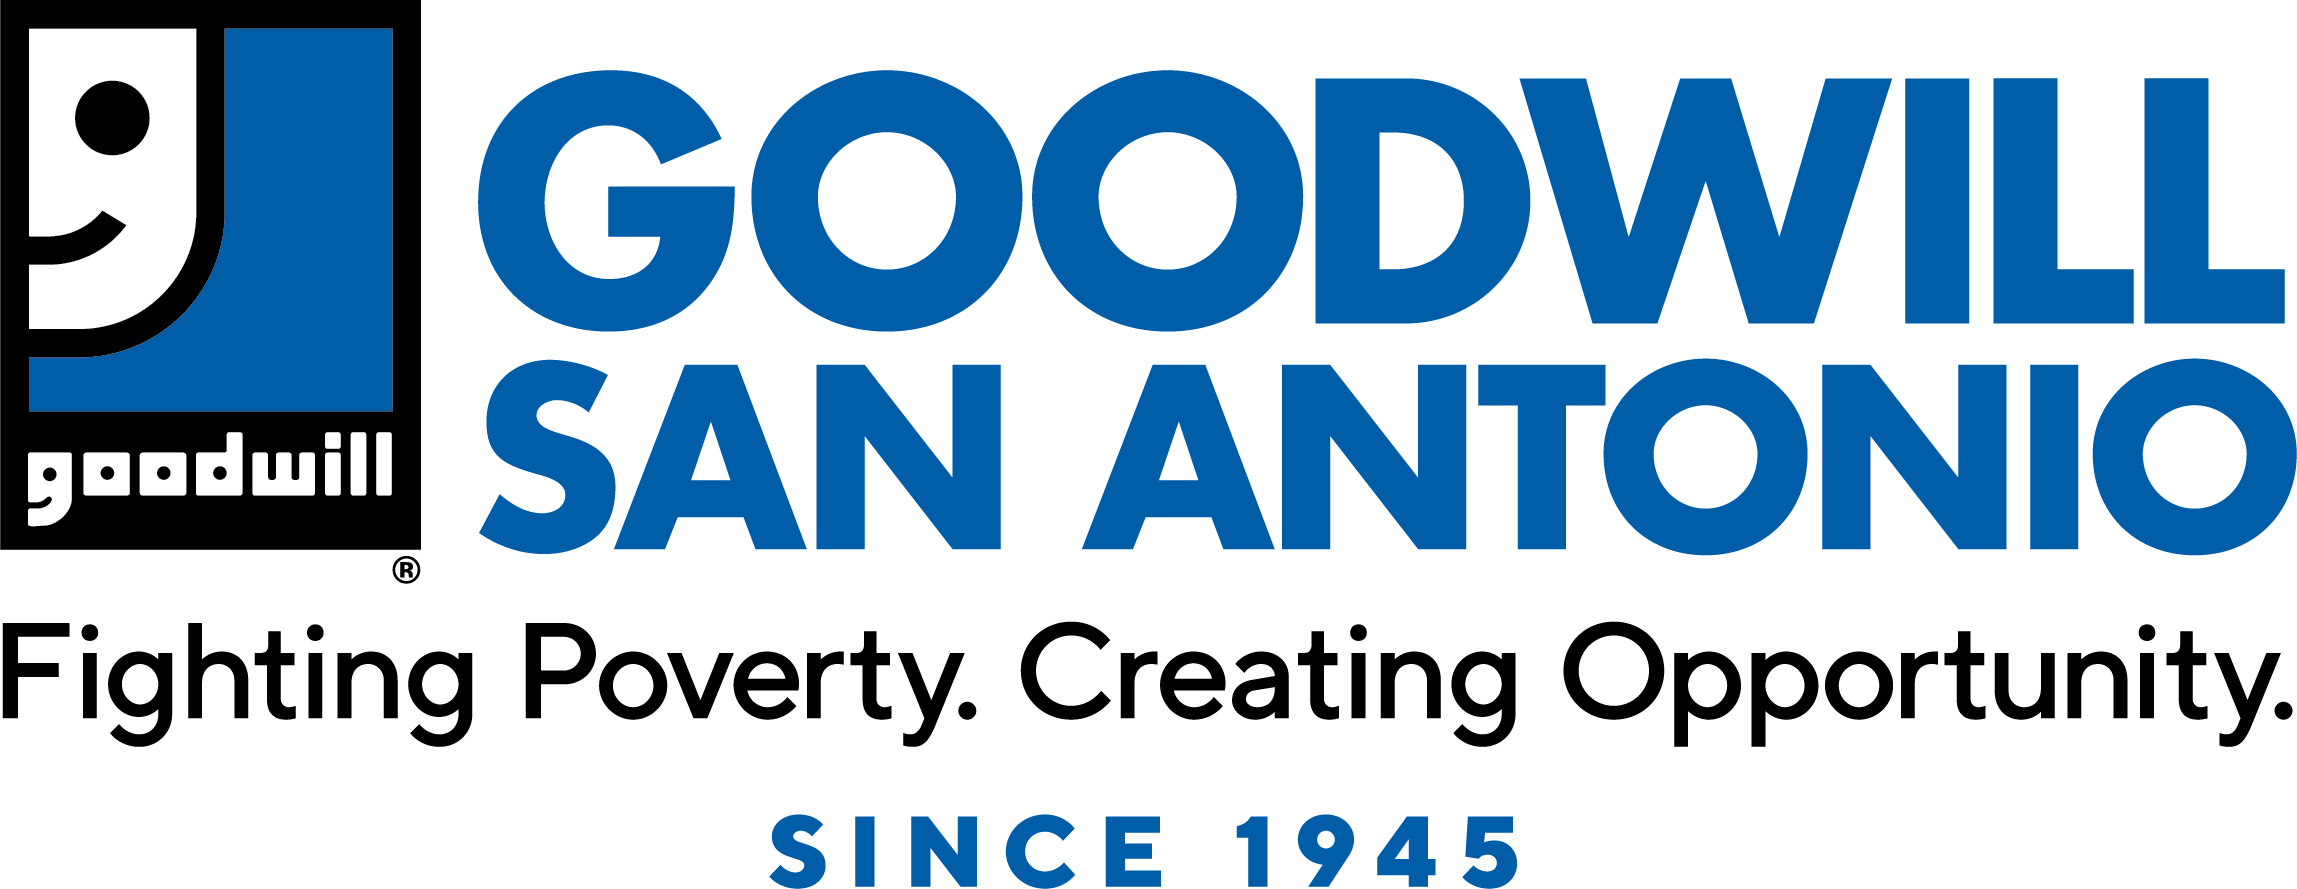 Goodwill San Antonio logo